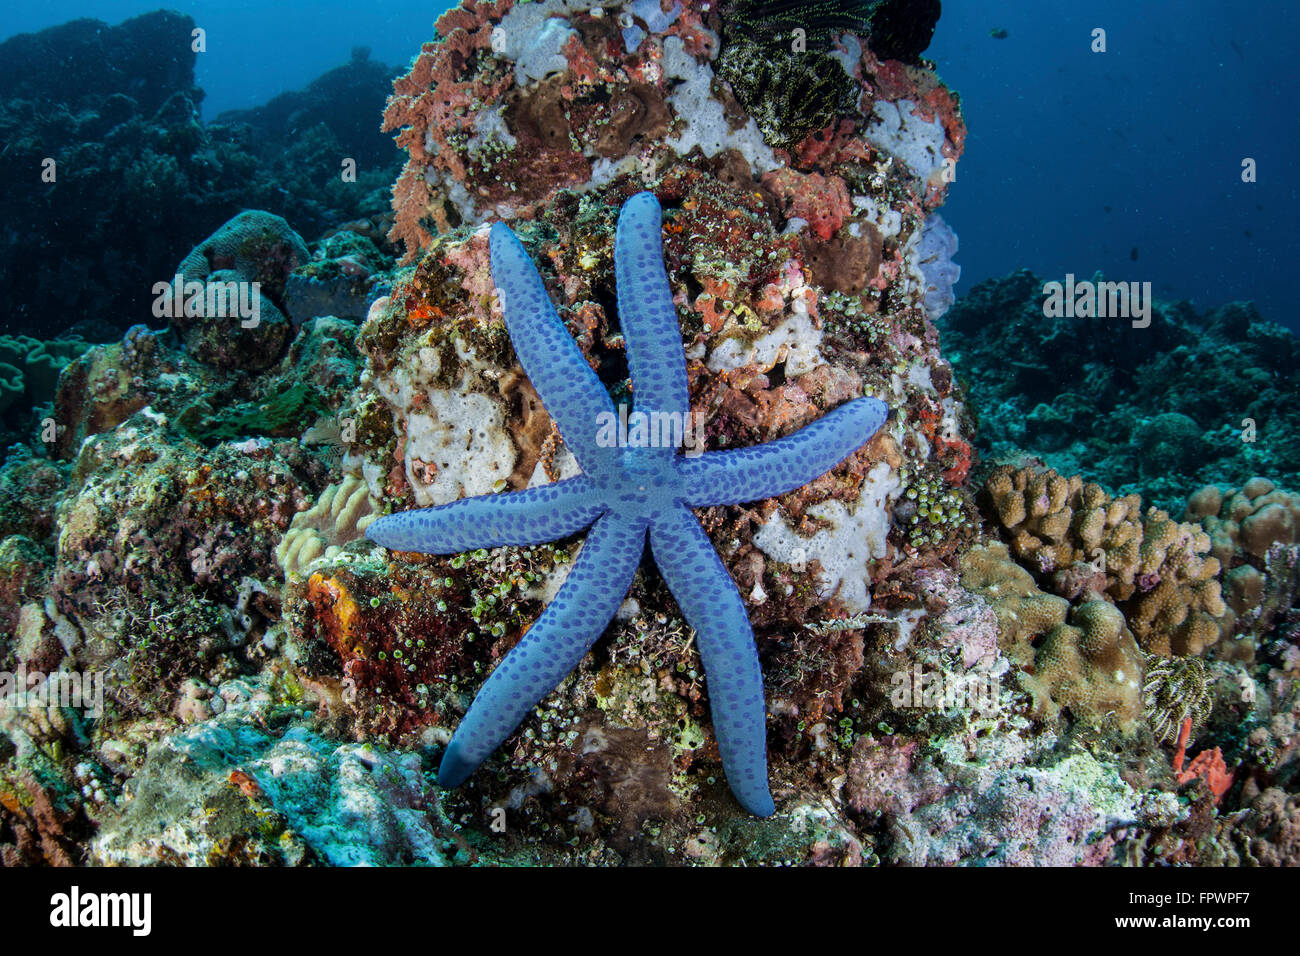 An unusual sea star (Linckia laevigata) clings to a diverse reef near the island of Bangka, Indonesia. This beautiful, tropical Stock Photo